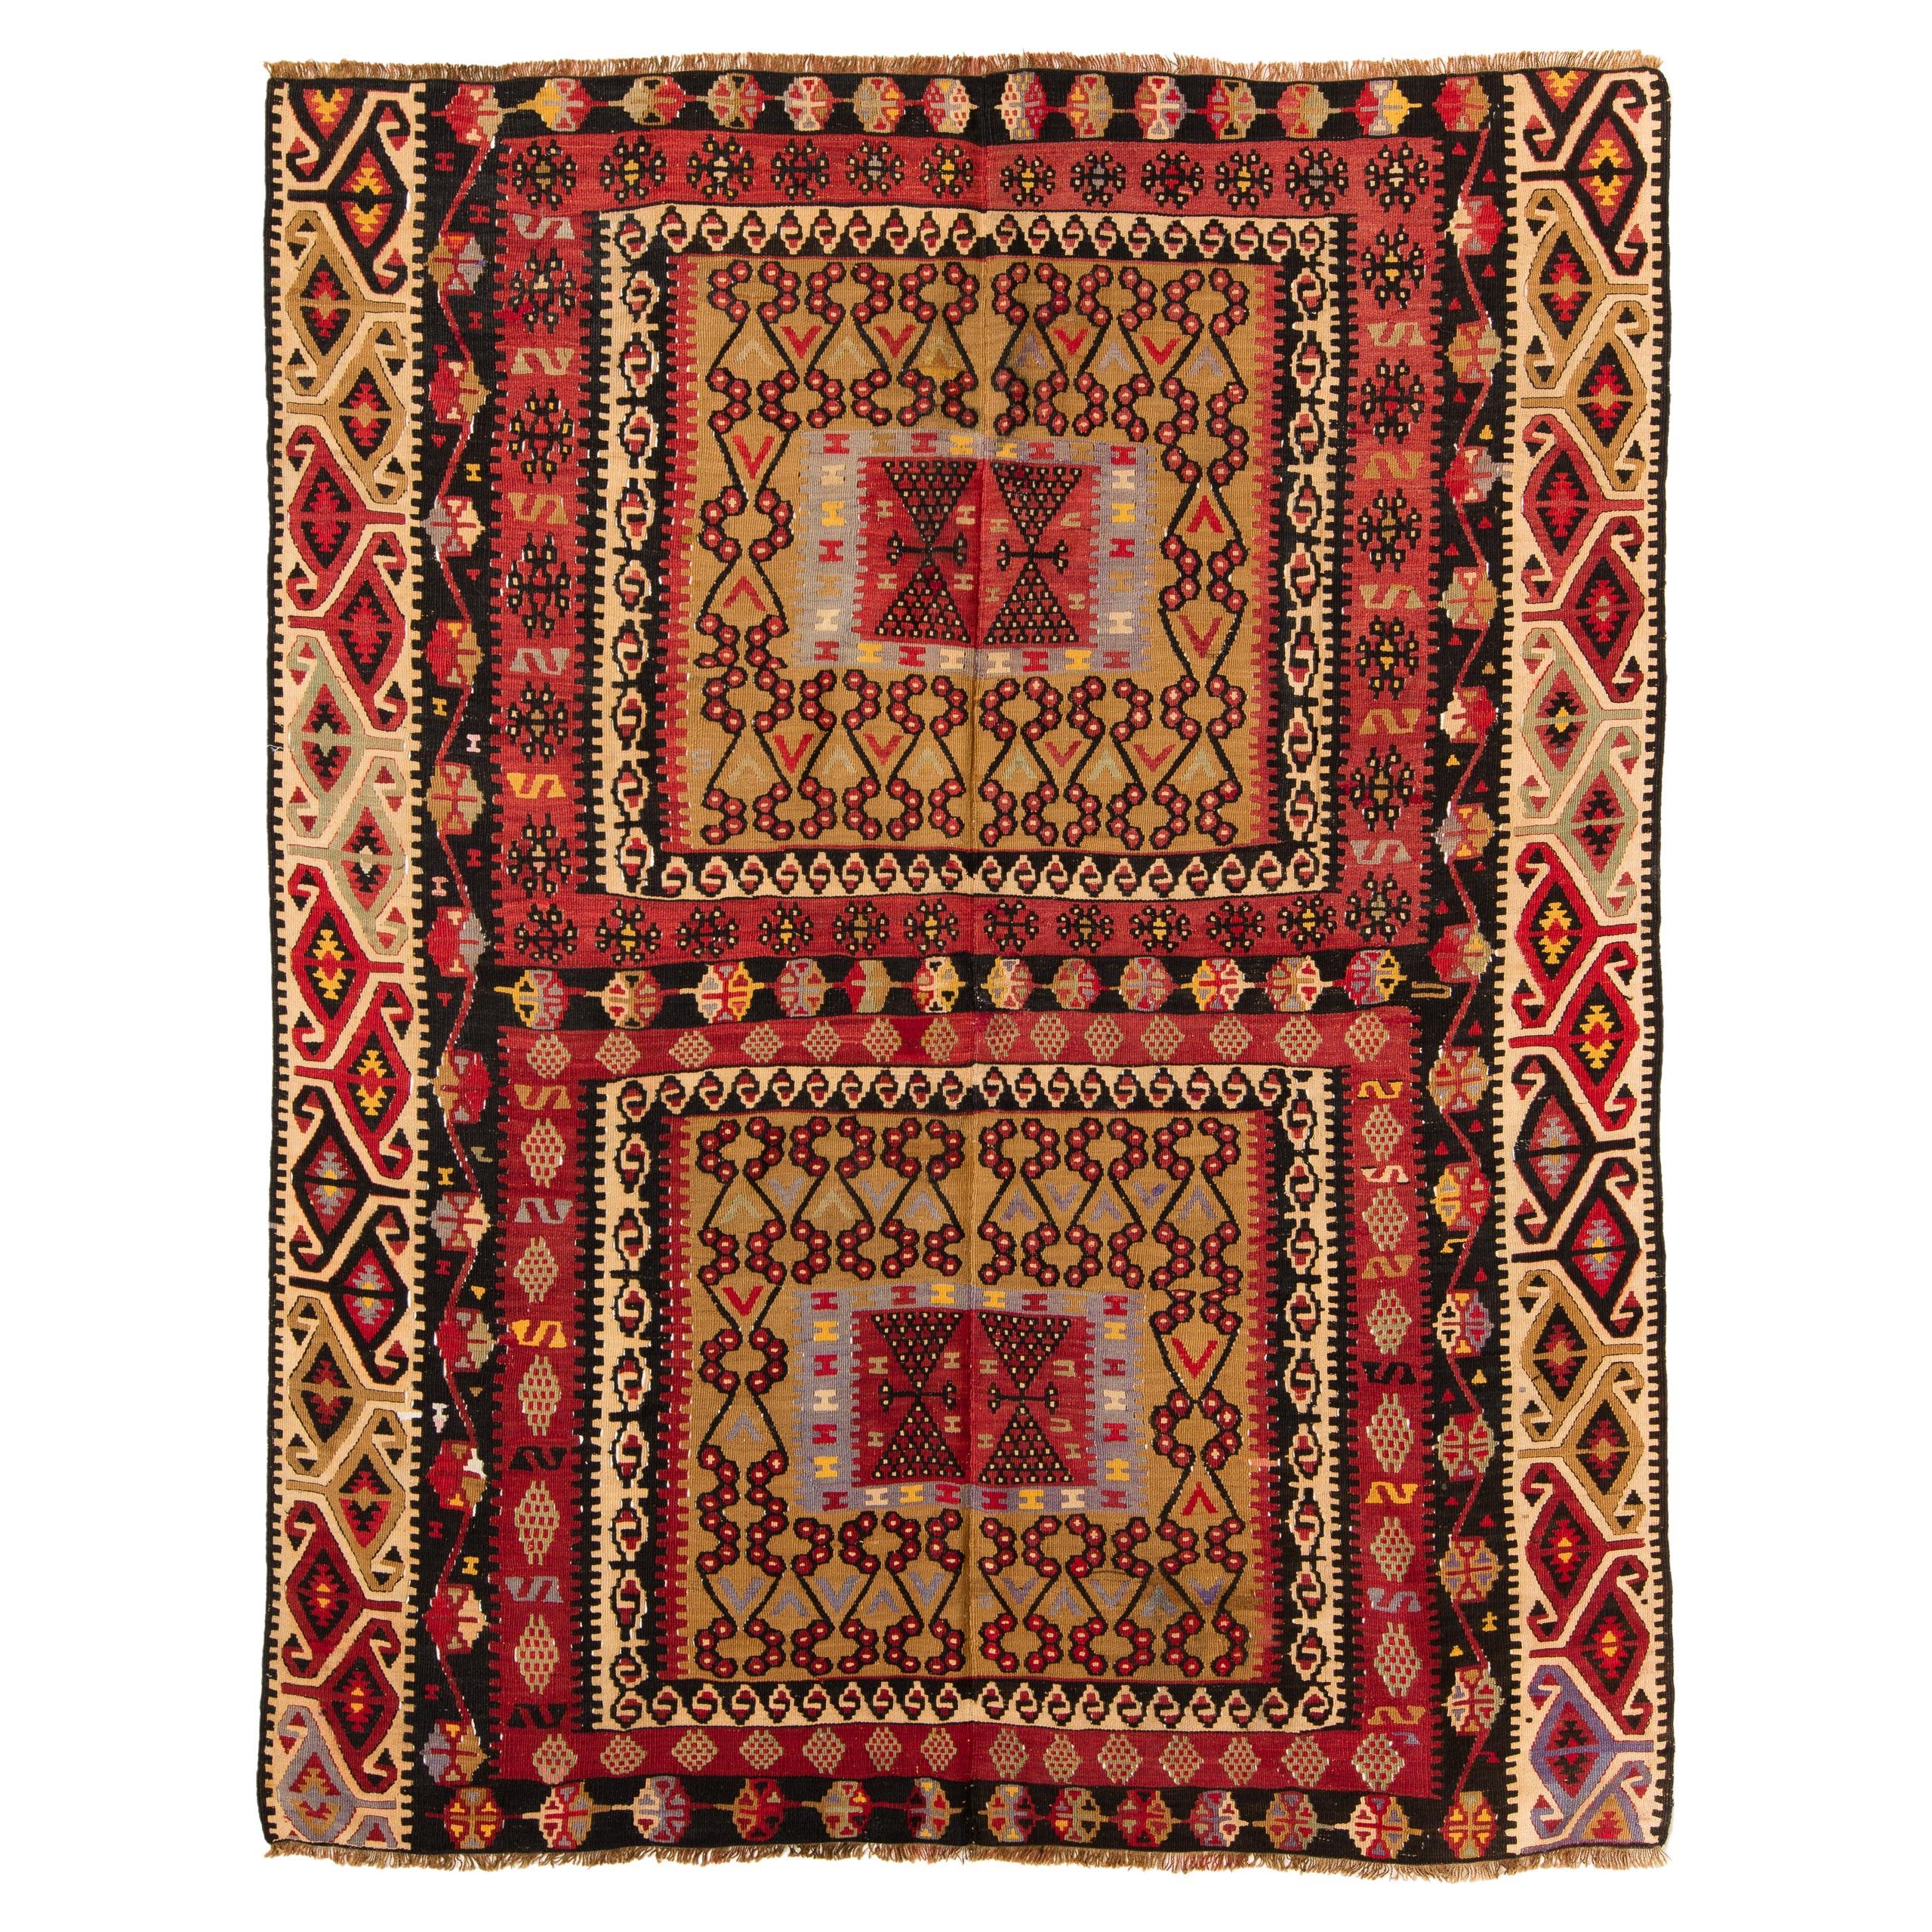 Old Kayseri Kilim Central Anatolian Rug Turkish Carpet